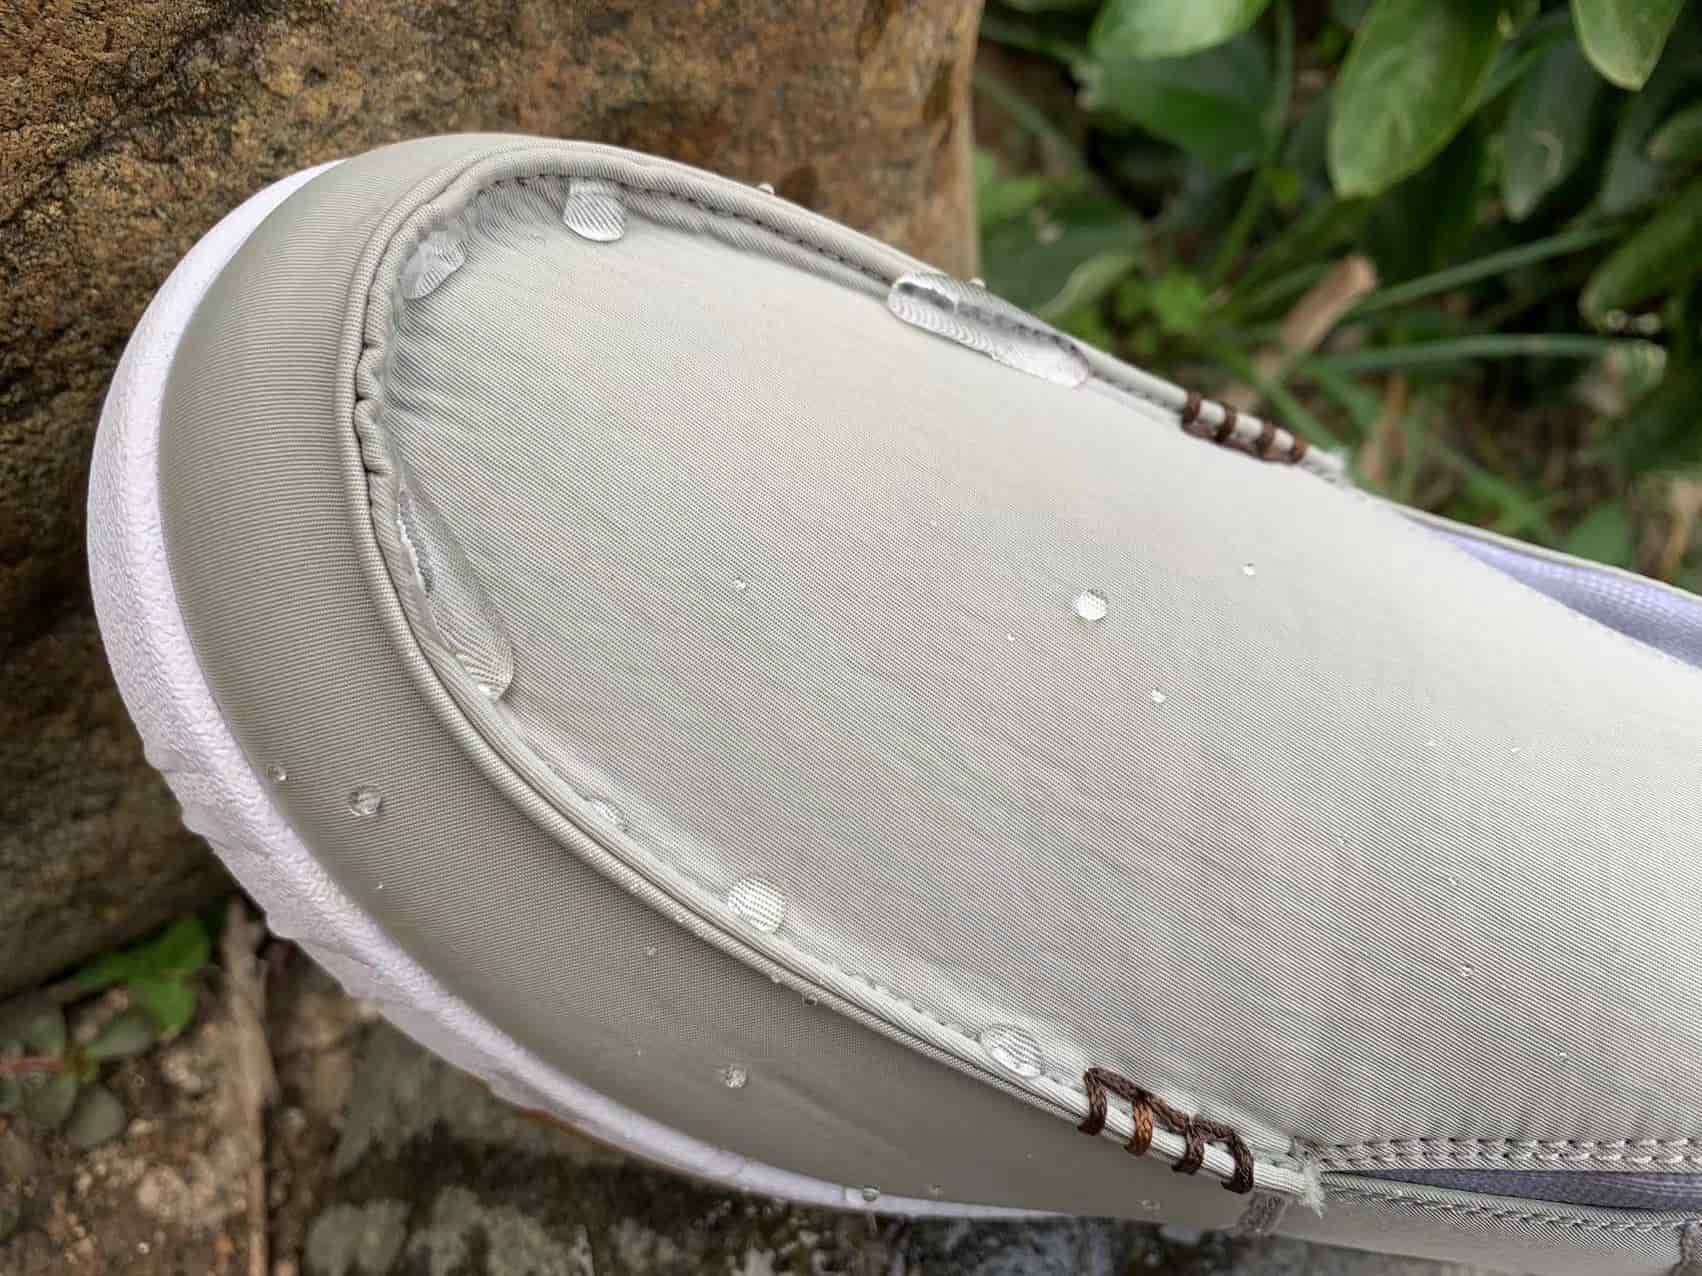 waterproof diabetic shoes for the elderly